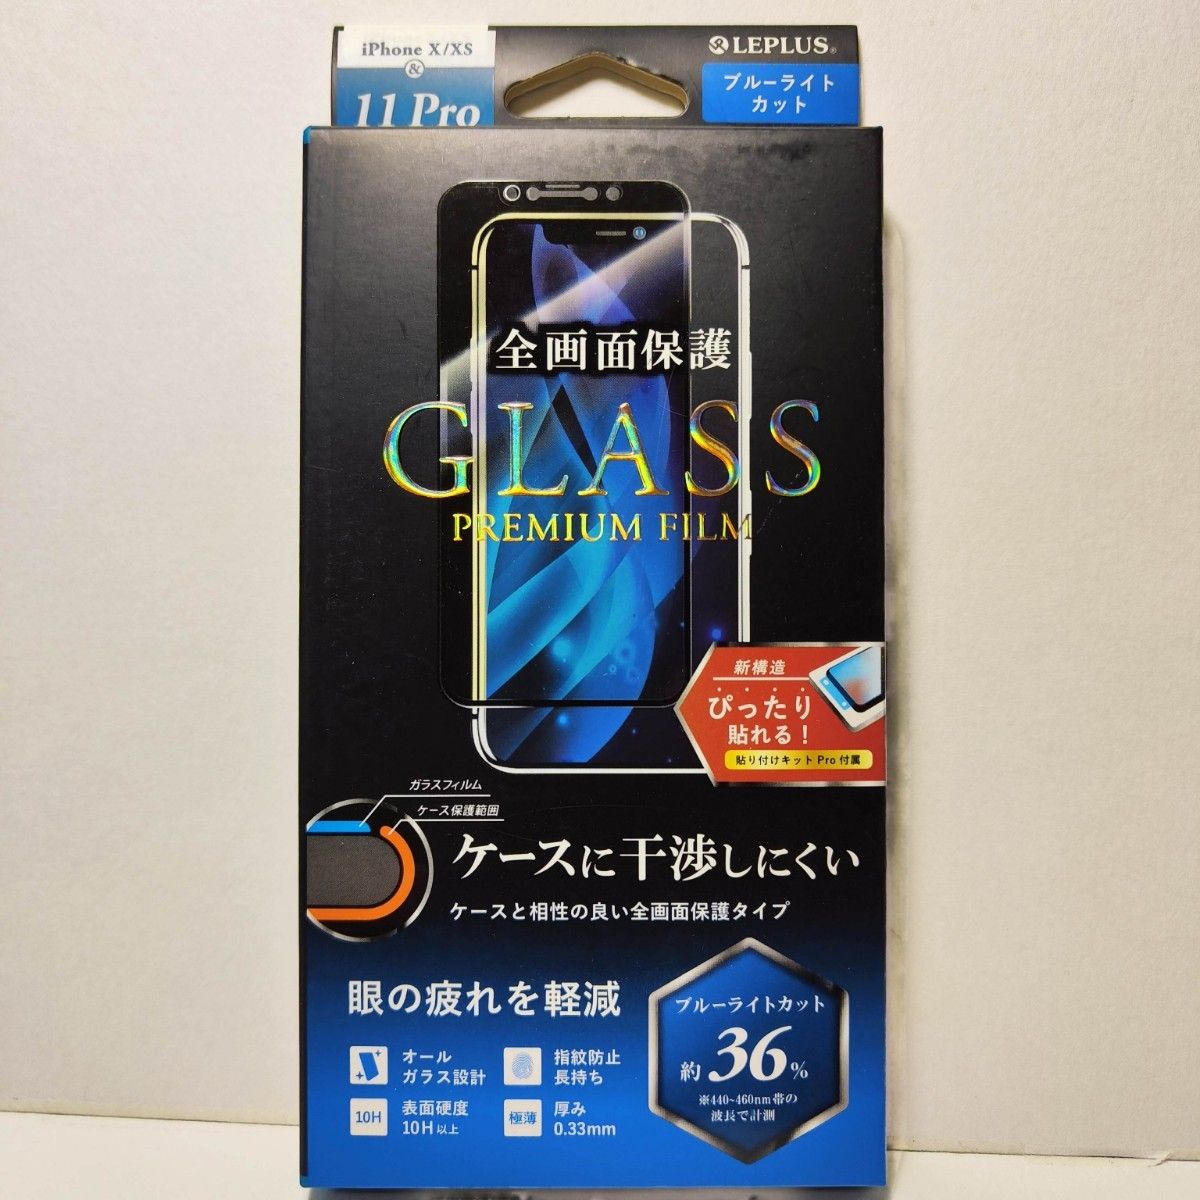 iPhone11Pro ガラス iPhoneXS iPhoneX ブルーライト iPhone XS X 11Pro 11 Pro